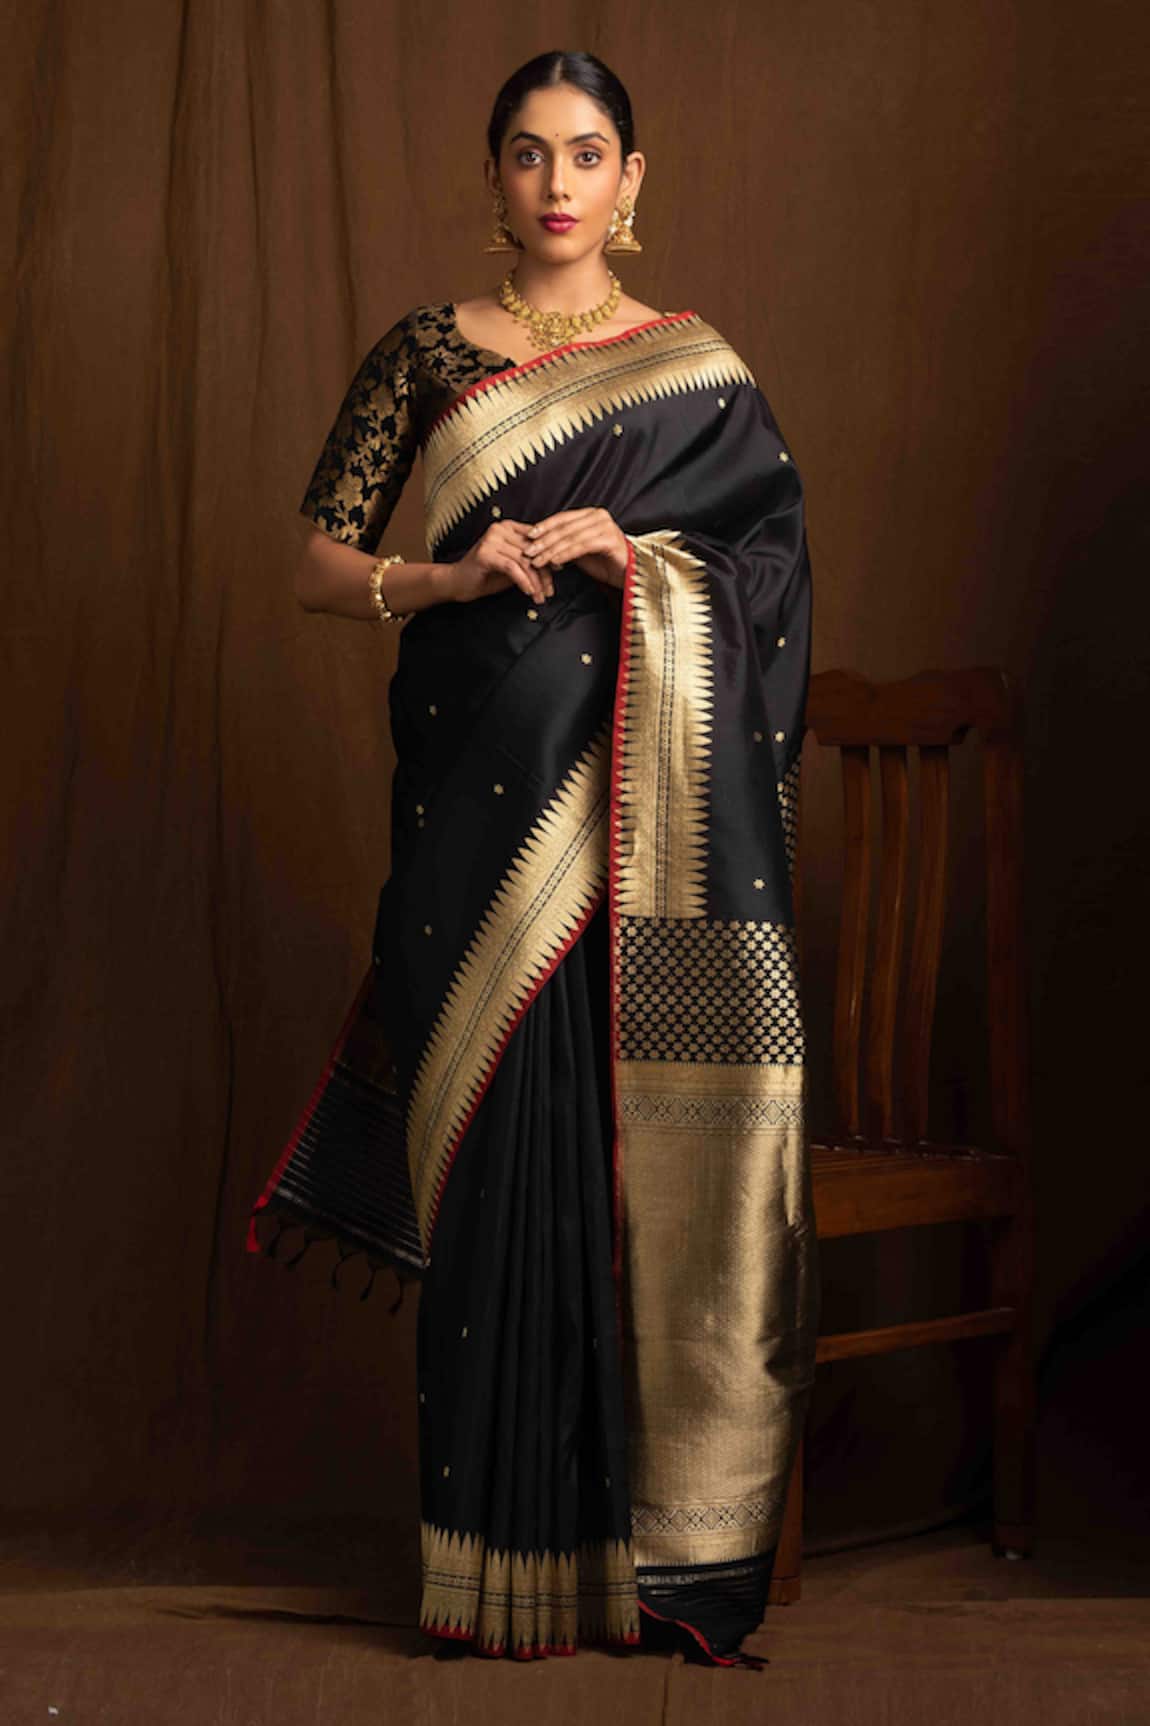 Diwali outfits| Deepika Padukone, Kareena Kapoor and more: Celeb-approved saree  ideas for Diwali dressing